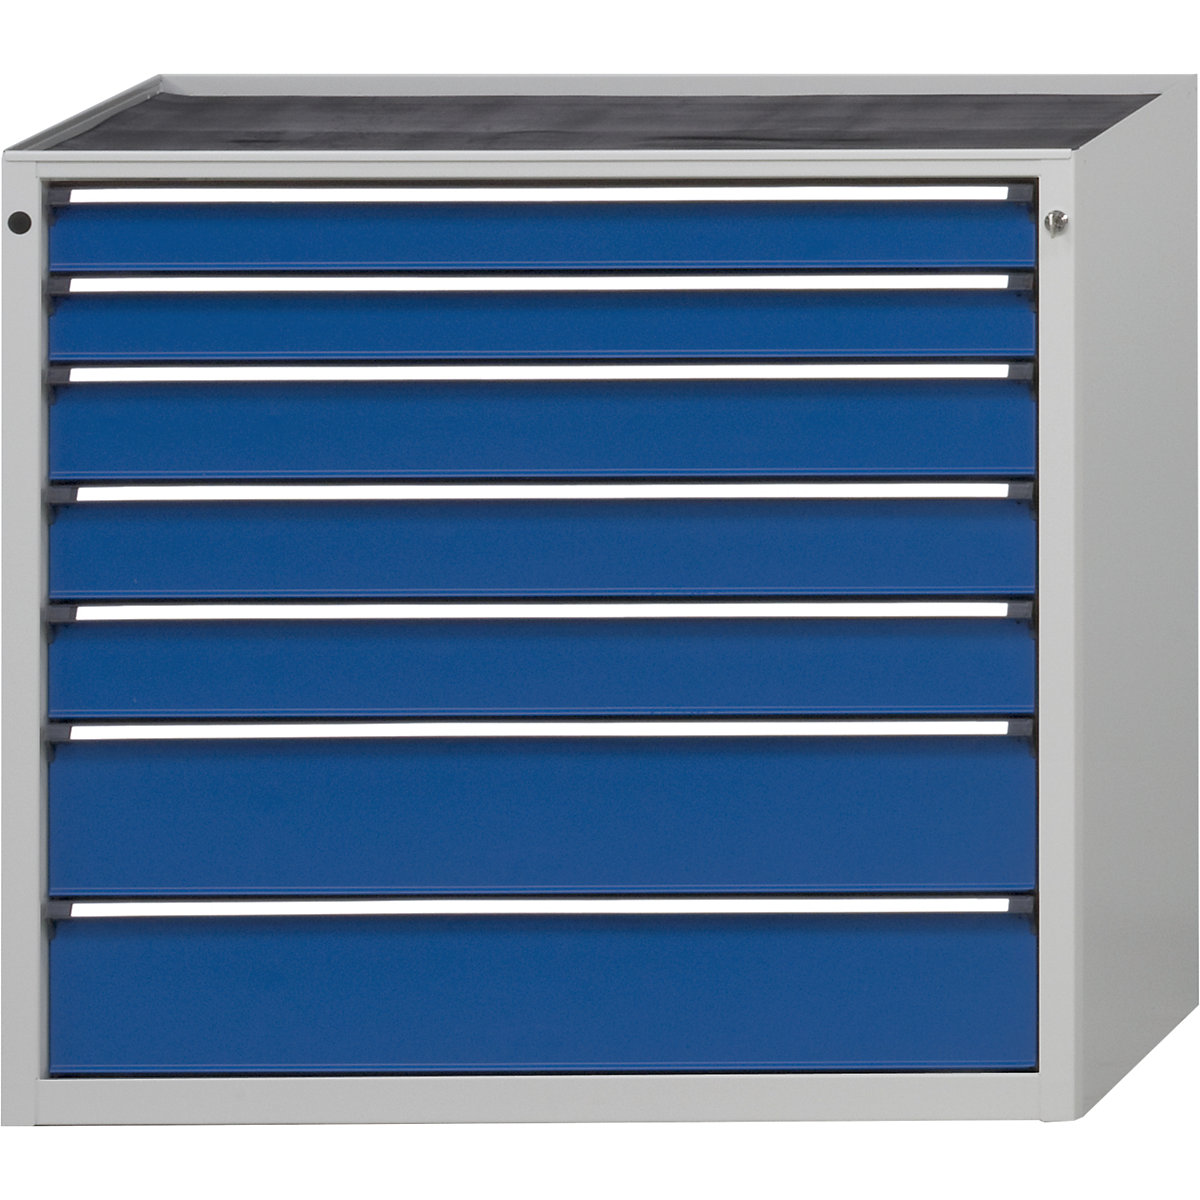 ANKE – Armoire à tiroirs, l x p 1060 x 675 mm, 7 tiroirs, hauteur 980 mm, façade bleu gentiane